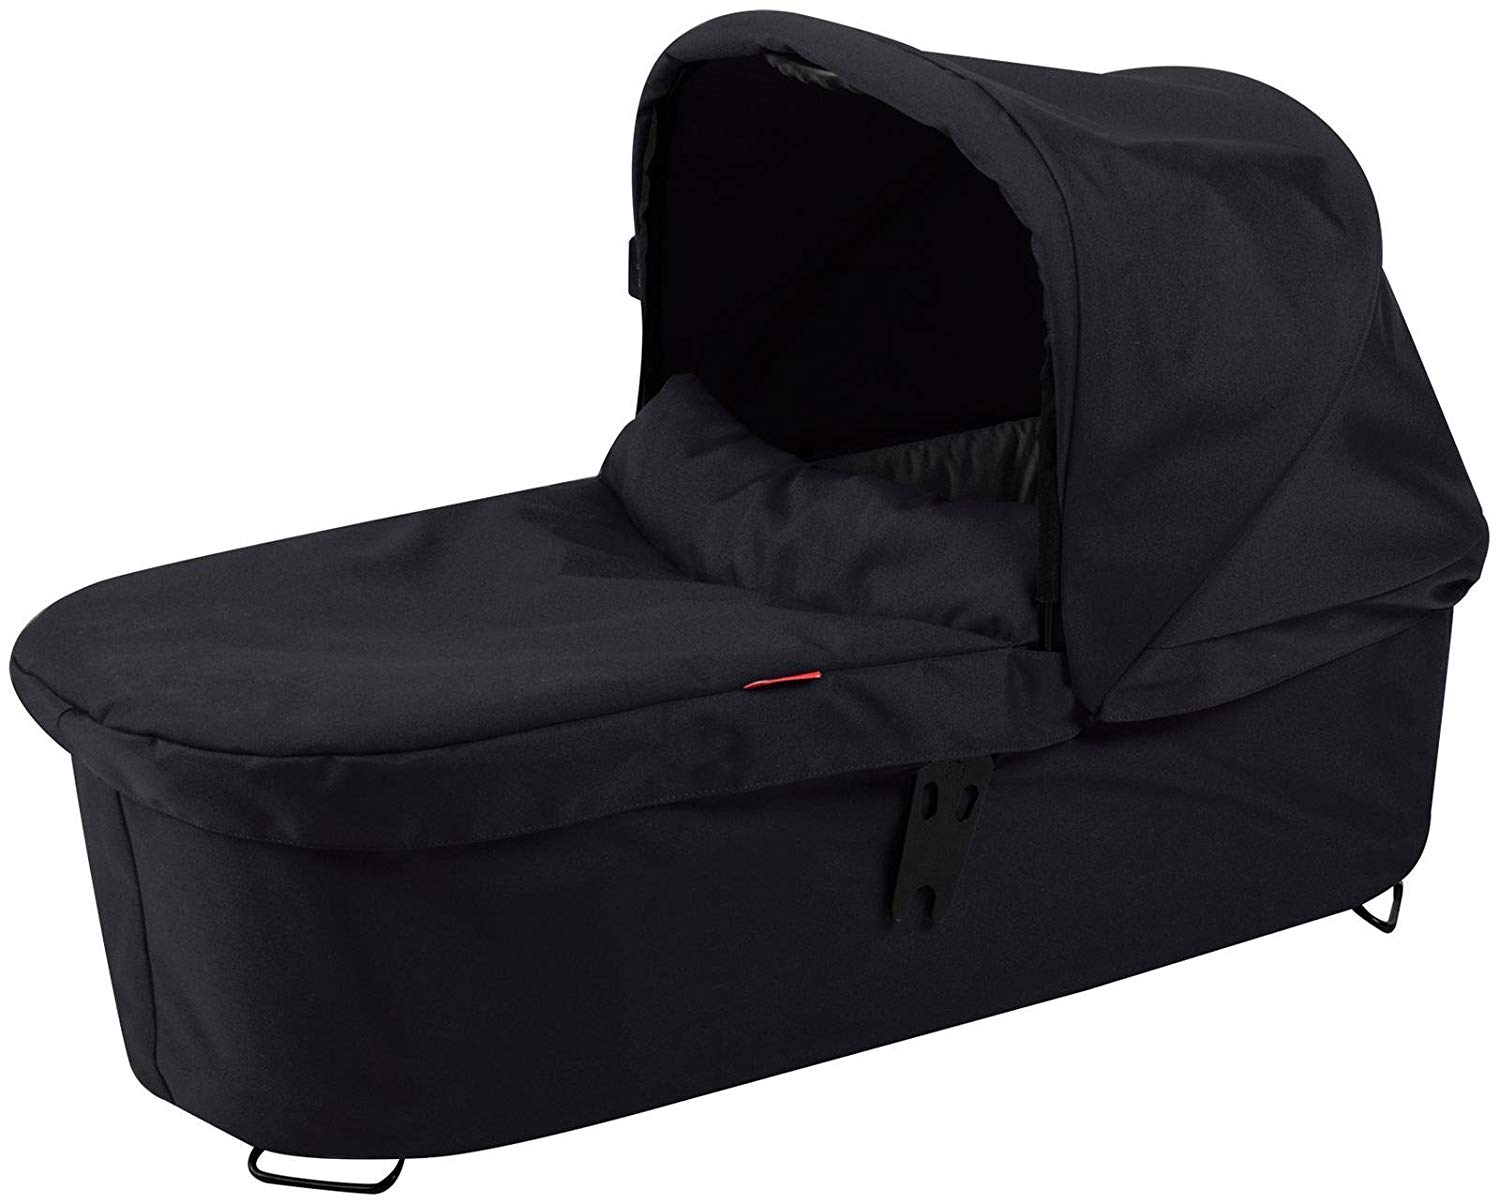 Phil & Teds Dash Stroller Snug Carrycot Mode black